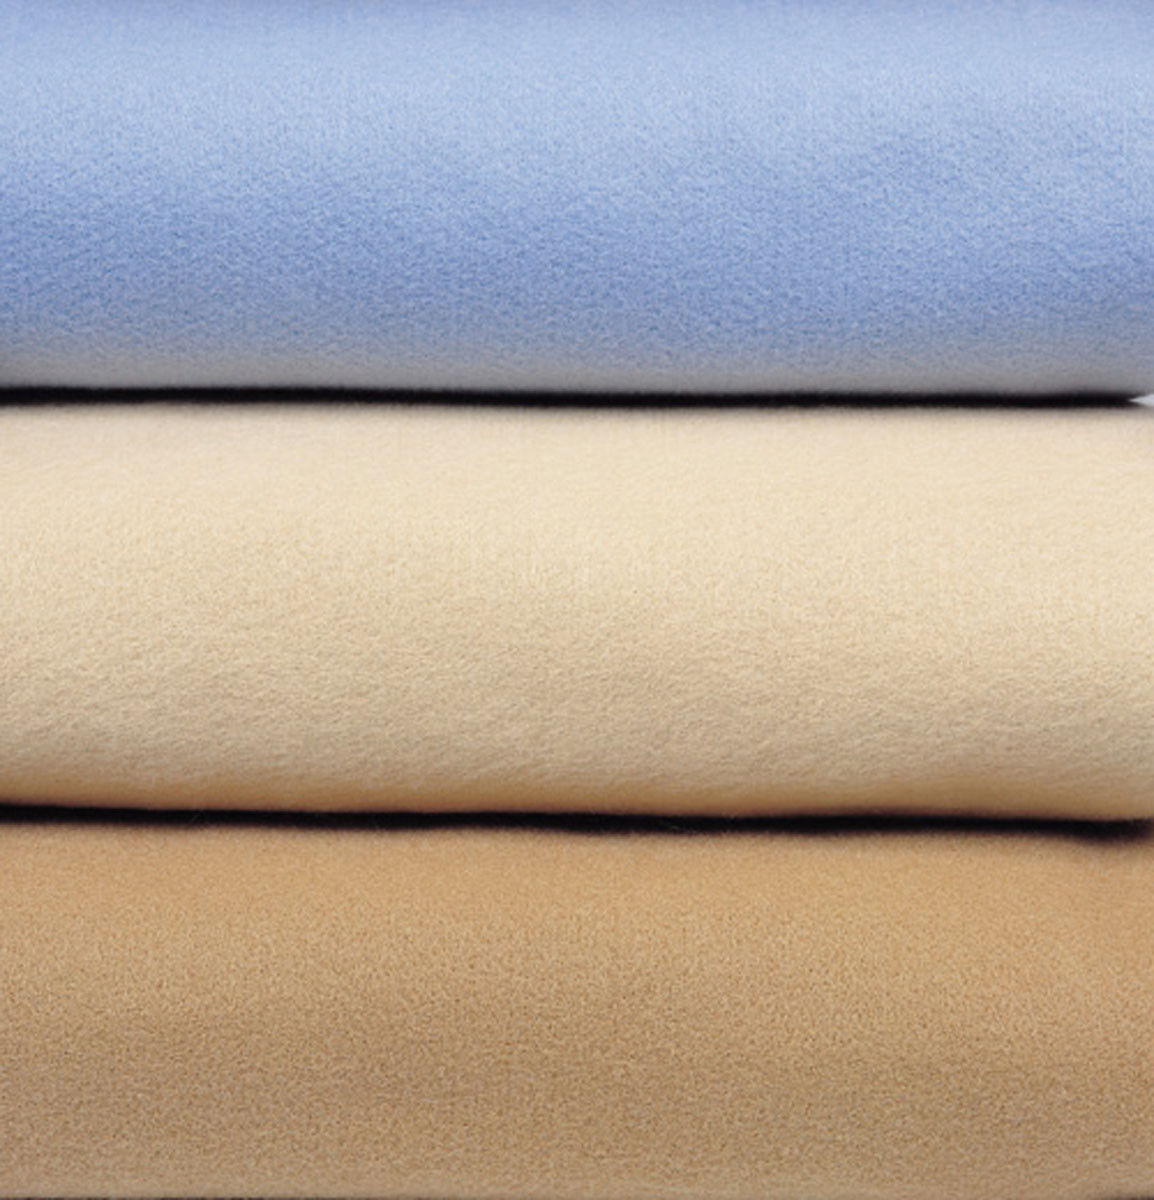 Is the 100 acrylic Westport blanket durable?